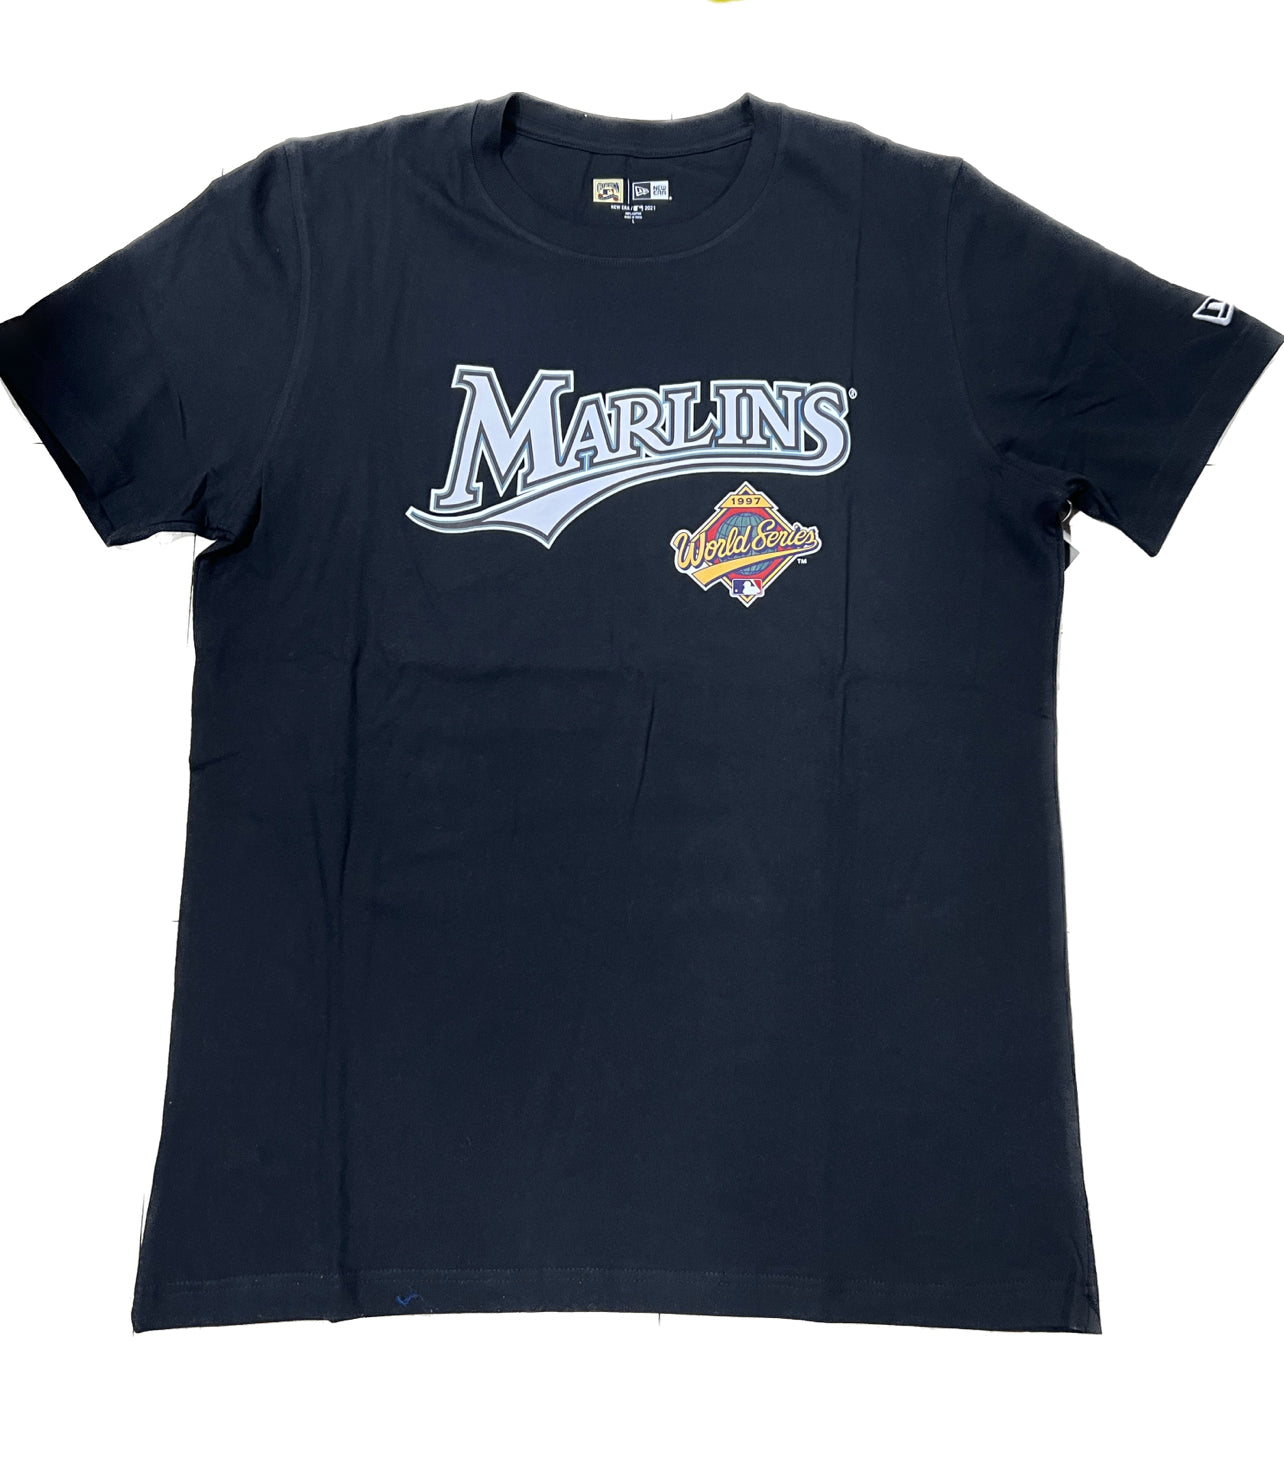 New Era Miami Marlins Cooperstown Collection Florida Marlins 1997 World Series T-Shirt - Black XL